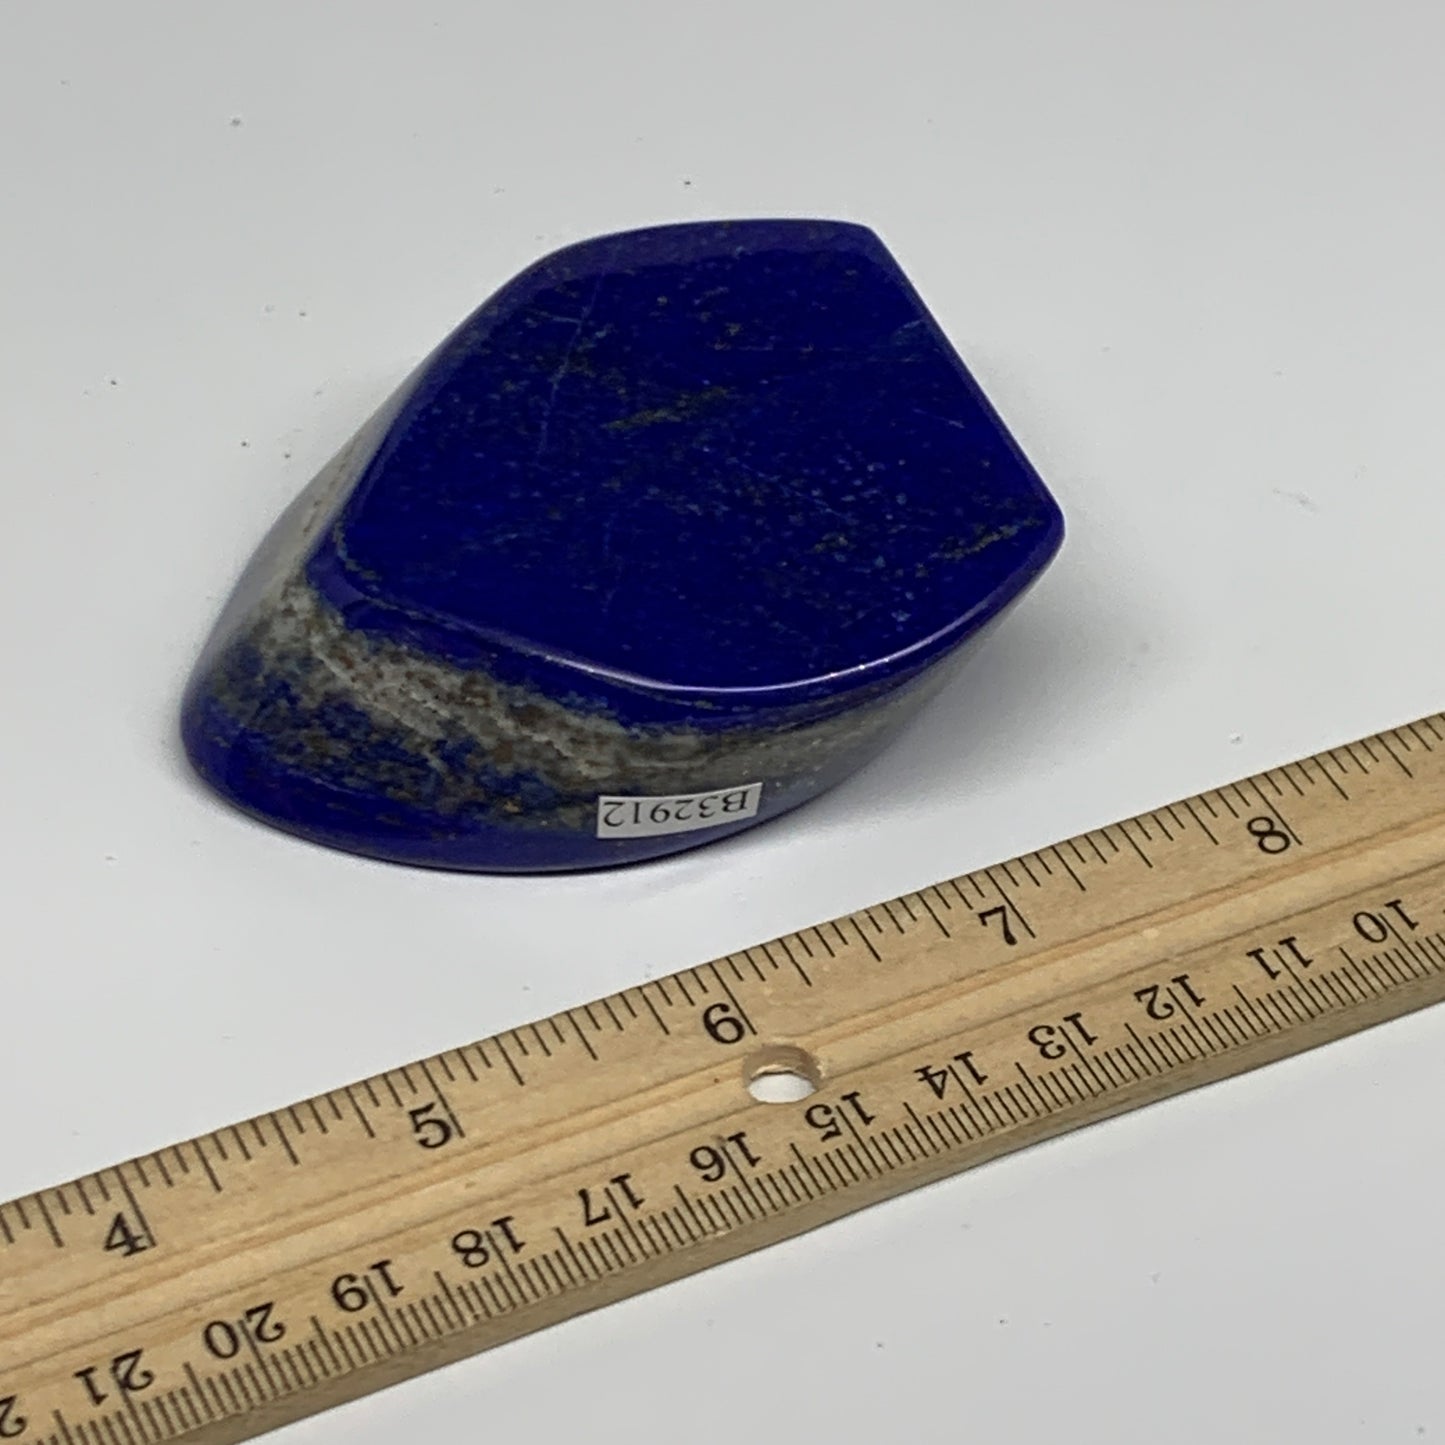 211.9g, 2.9"x2.7"x1.9" Natural Freeform Lapis Lazuli from Afghanistan, B32912